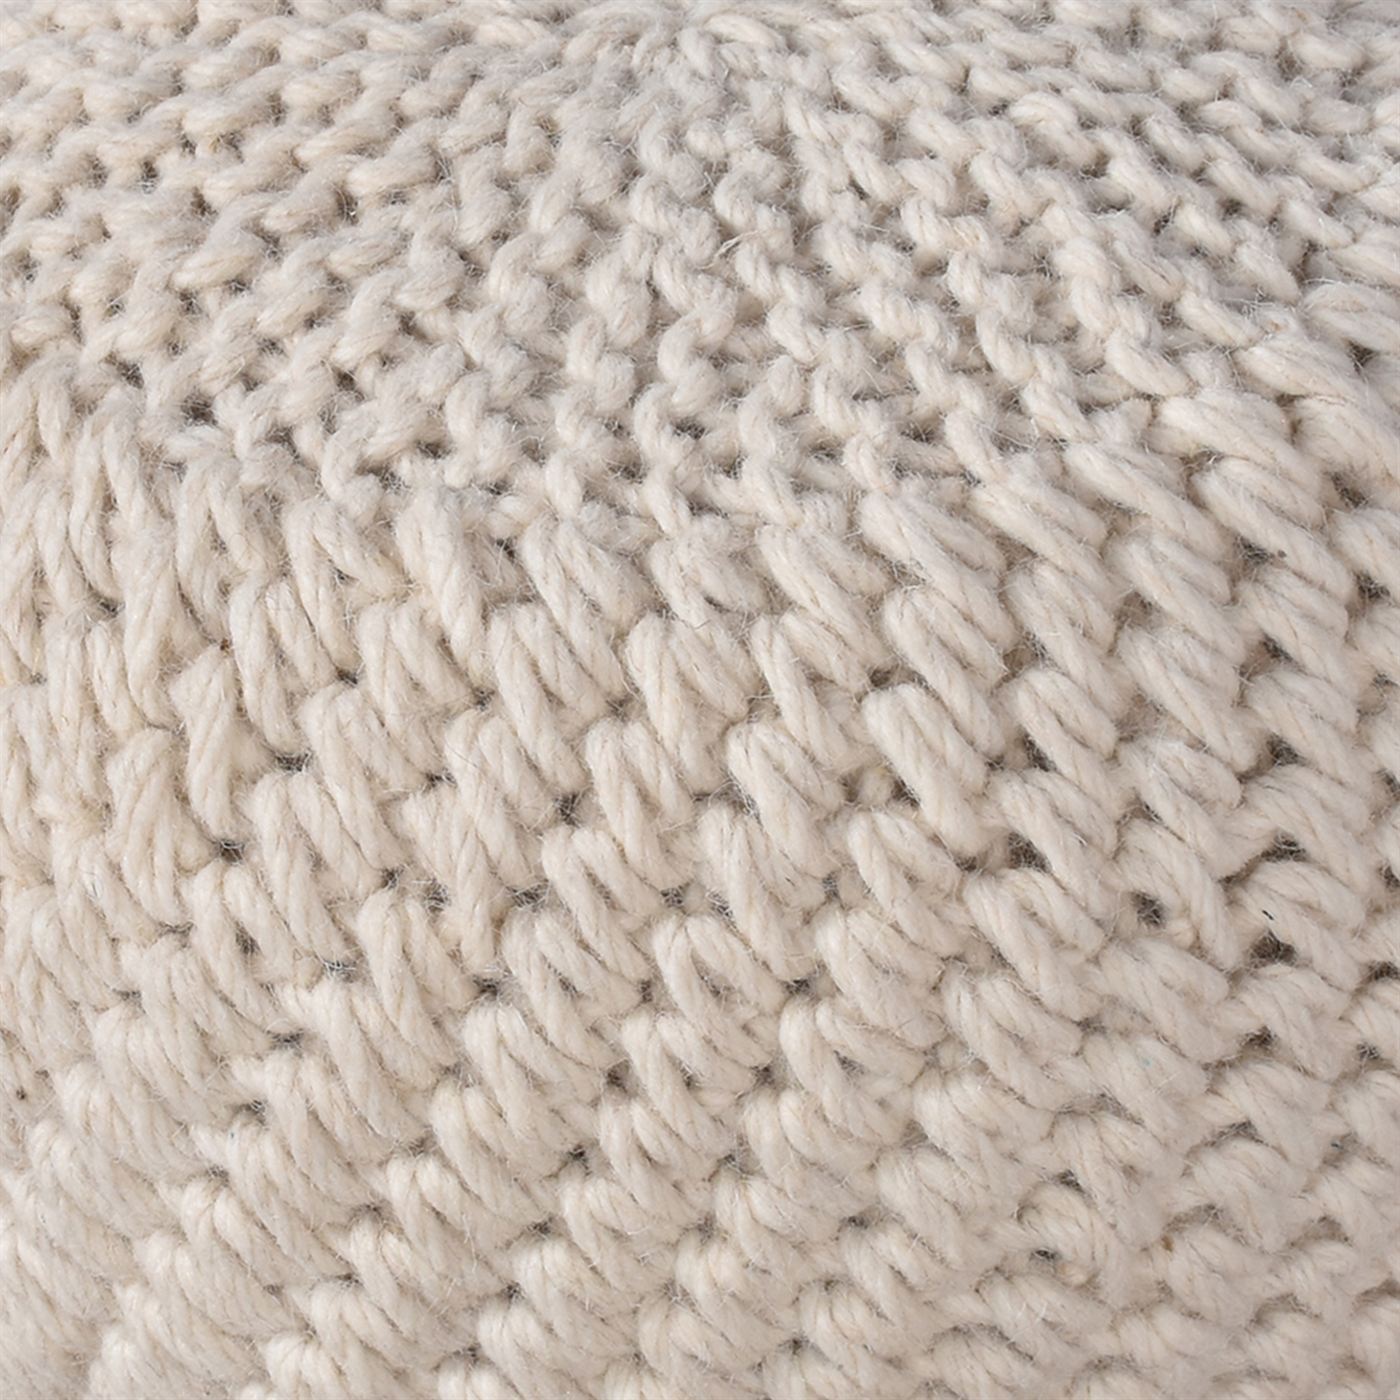 Haifa Pouf, Wool, Natural White, Hm Knitted, Flat Weave